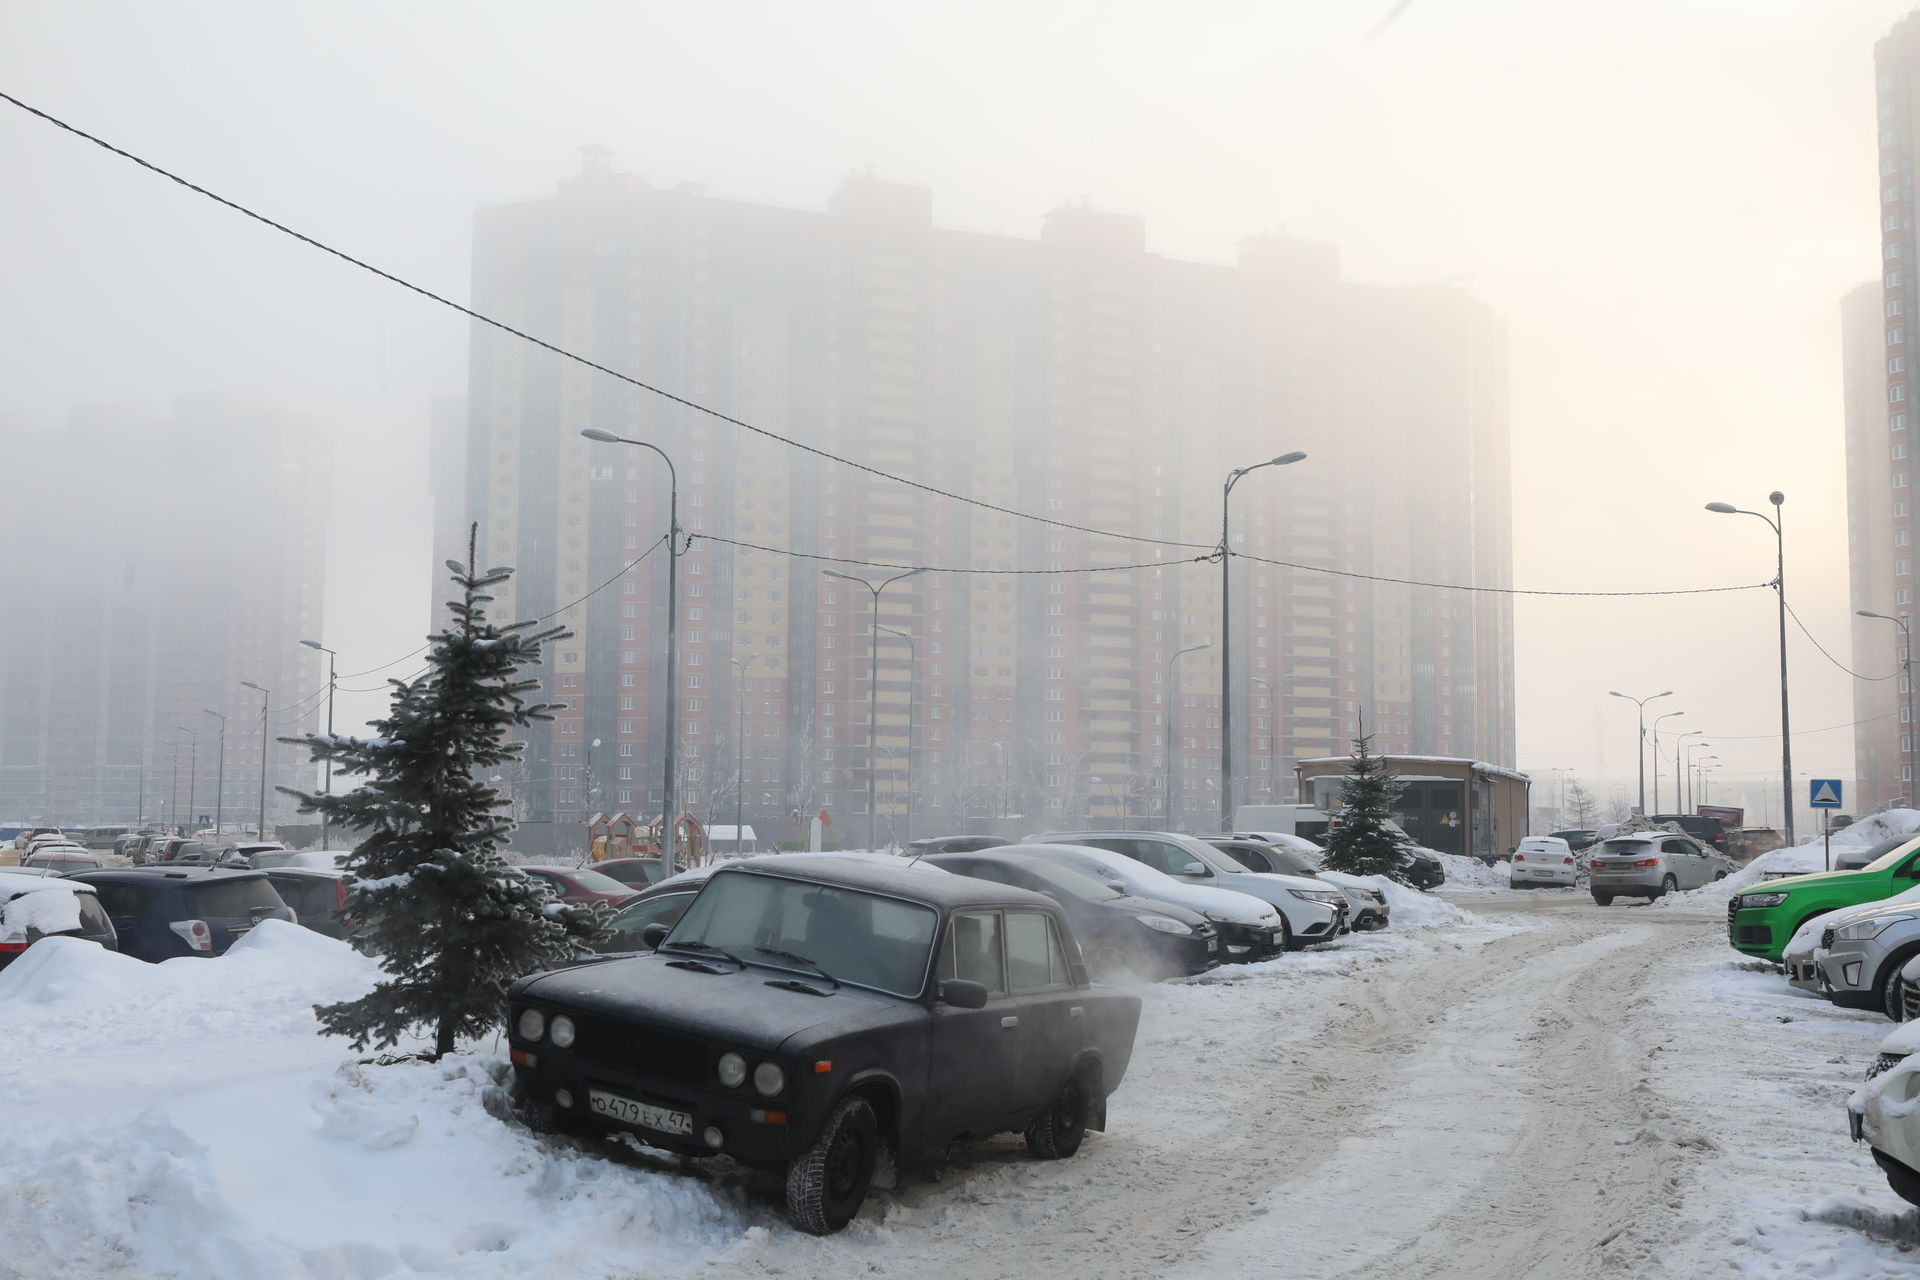 15 января 2023 г. Туман зимой в городе. Зимний туман в городе. Туманная зима город. Туман зима город.